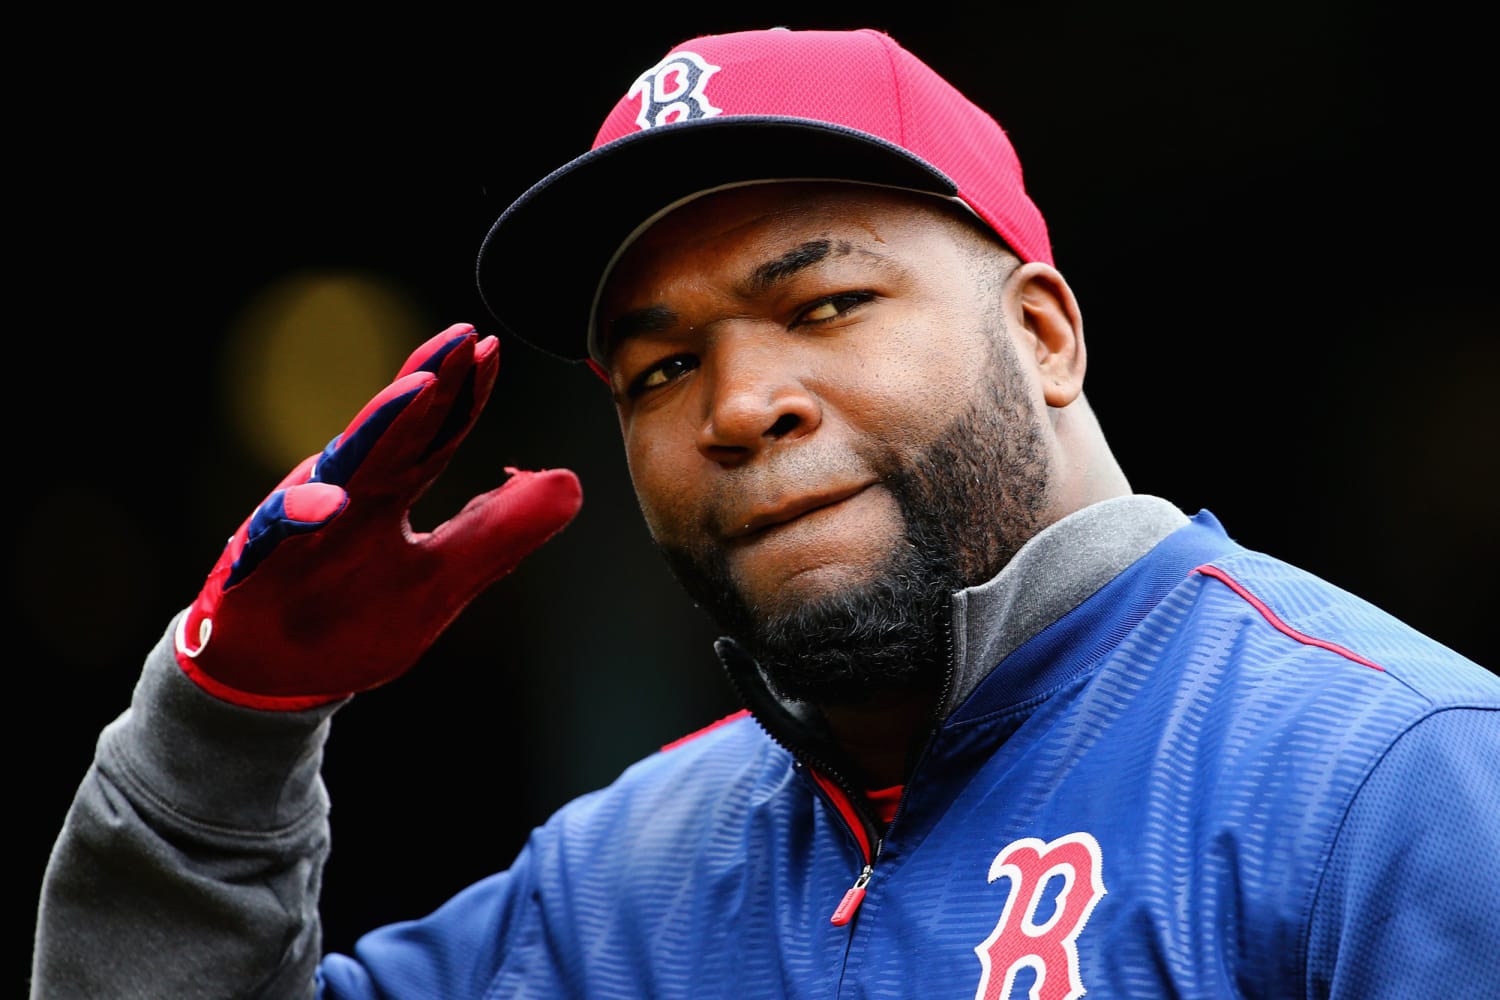 As David Ortiz faces life after baseball, Boston faces life after